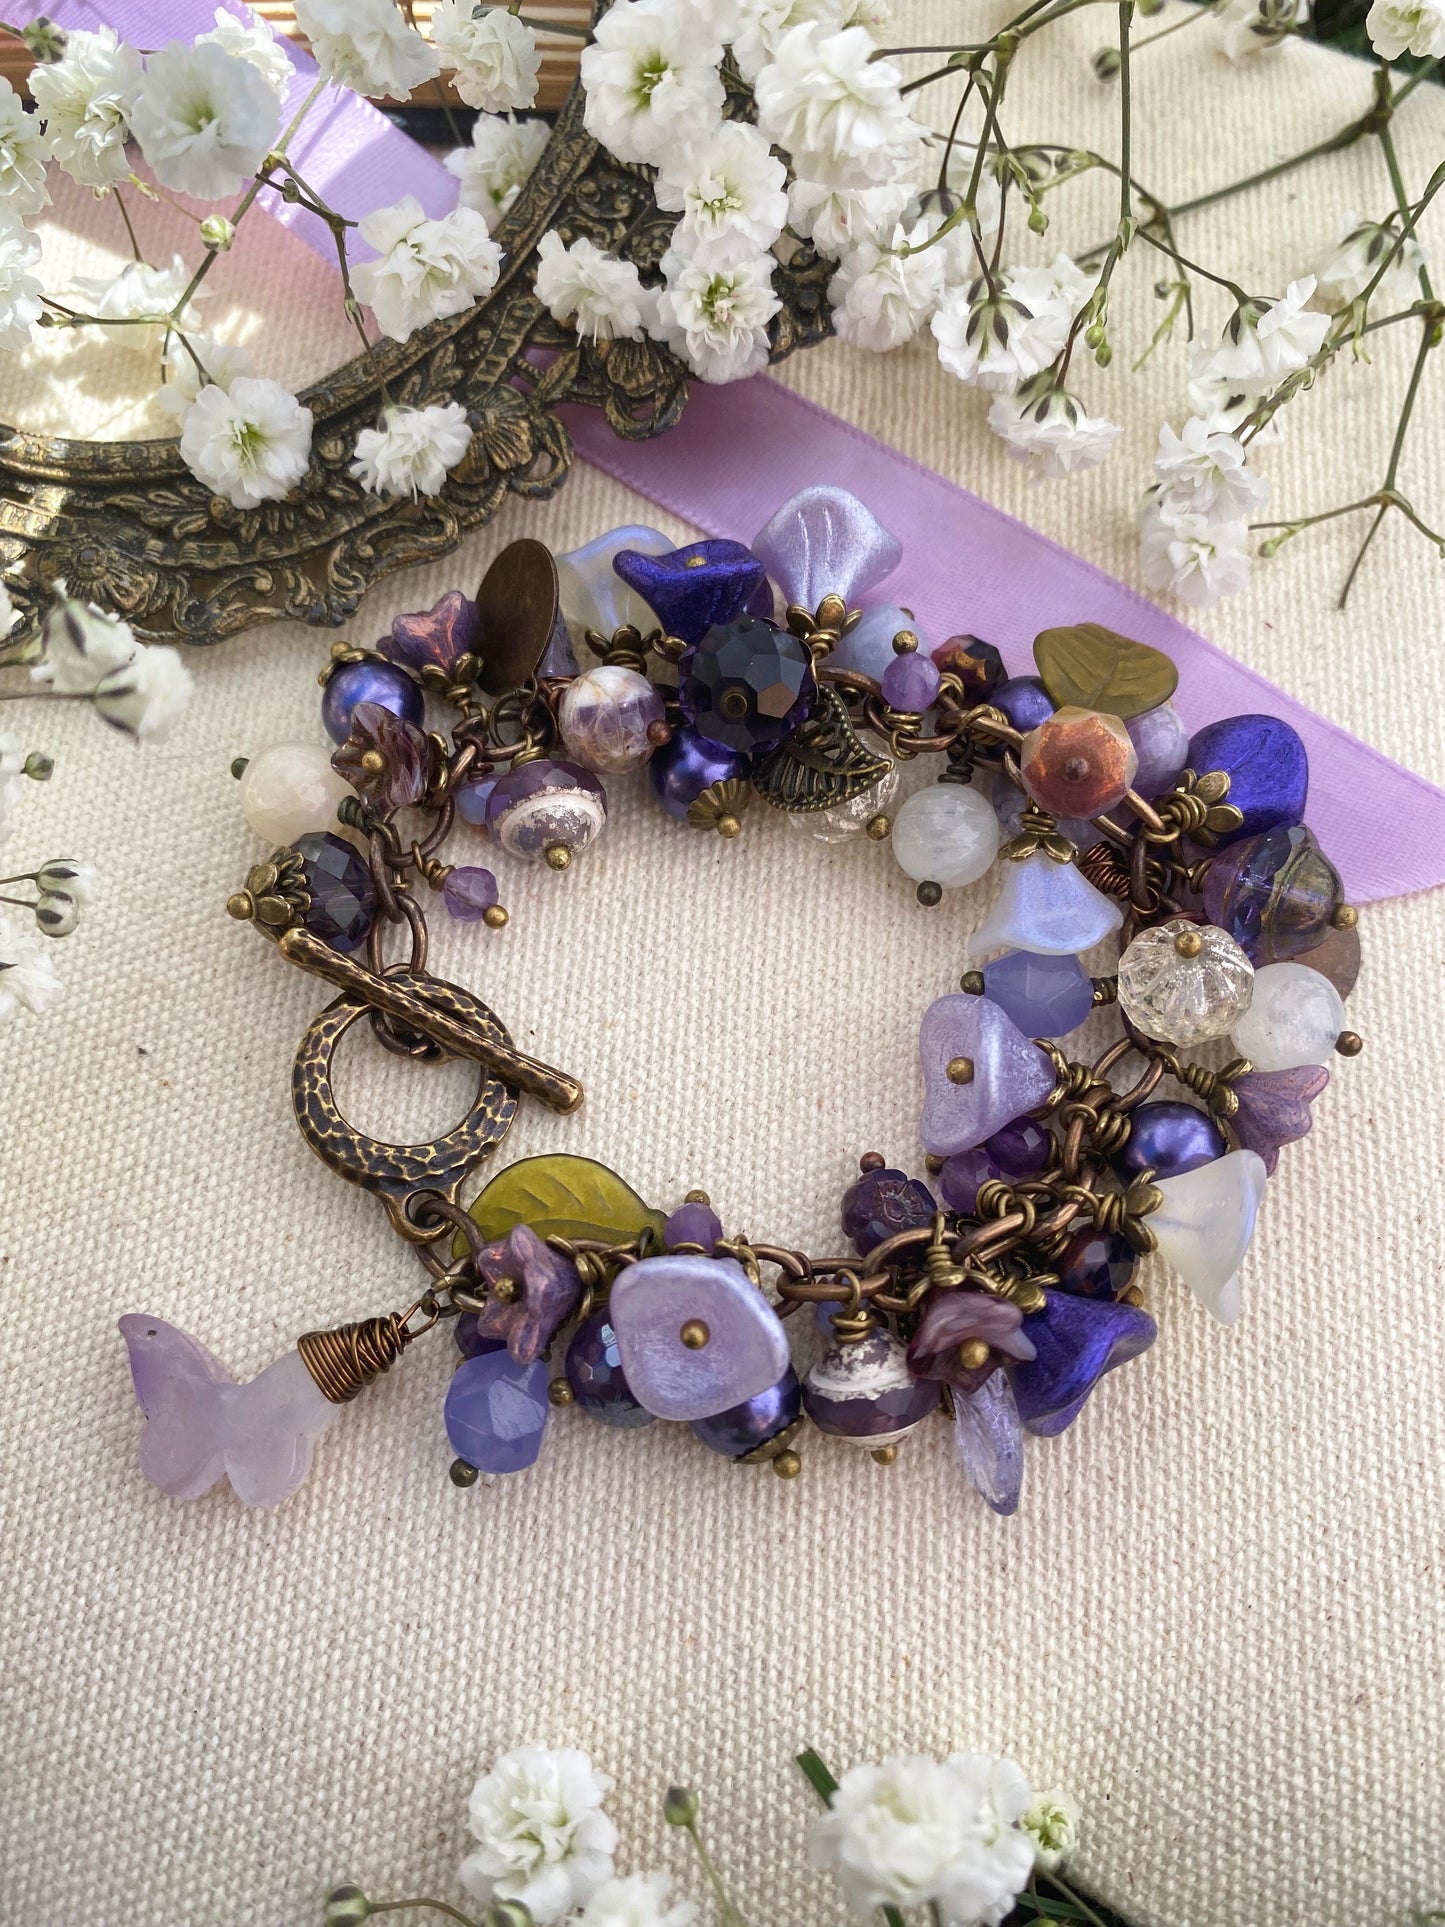 Mto. Purple petals. Moonstone, Amethyst gemstone, Czech glass, bronze metal bracelet. - Andria Bieber Designs 